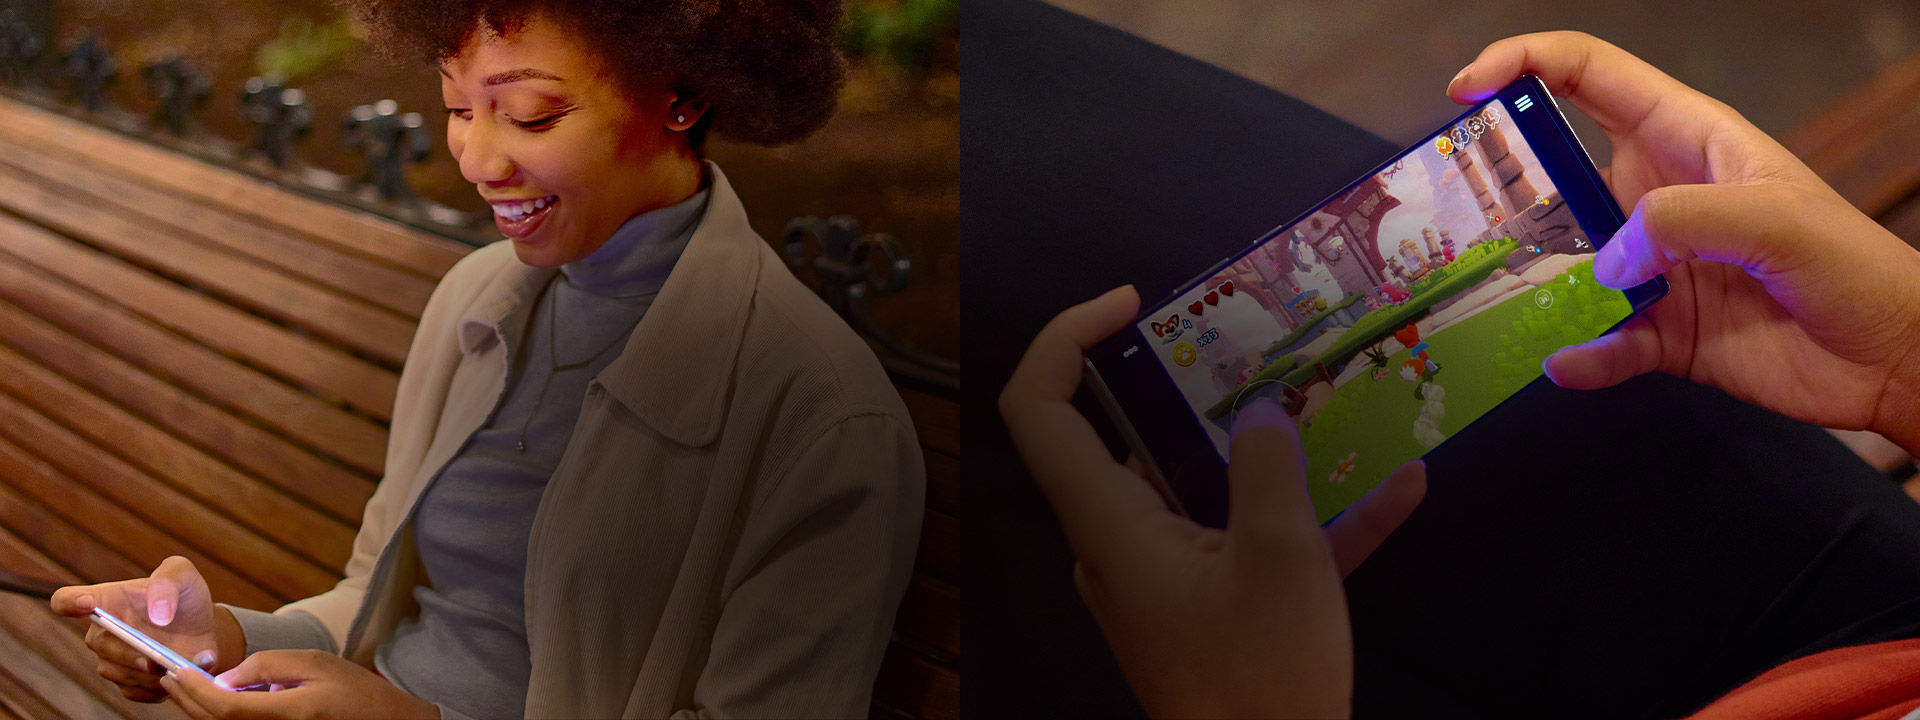 Una mujer en un banco juega a Super Lucky's Tale en su celular con controles táctiles